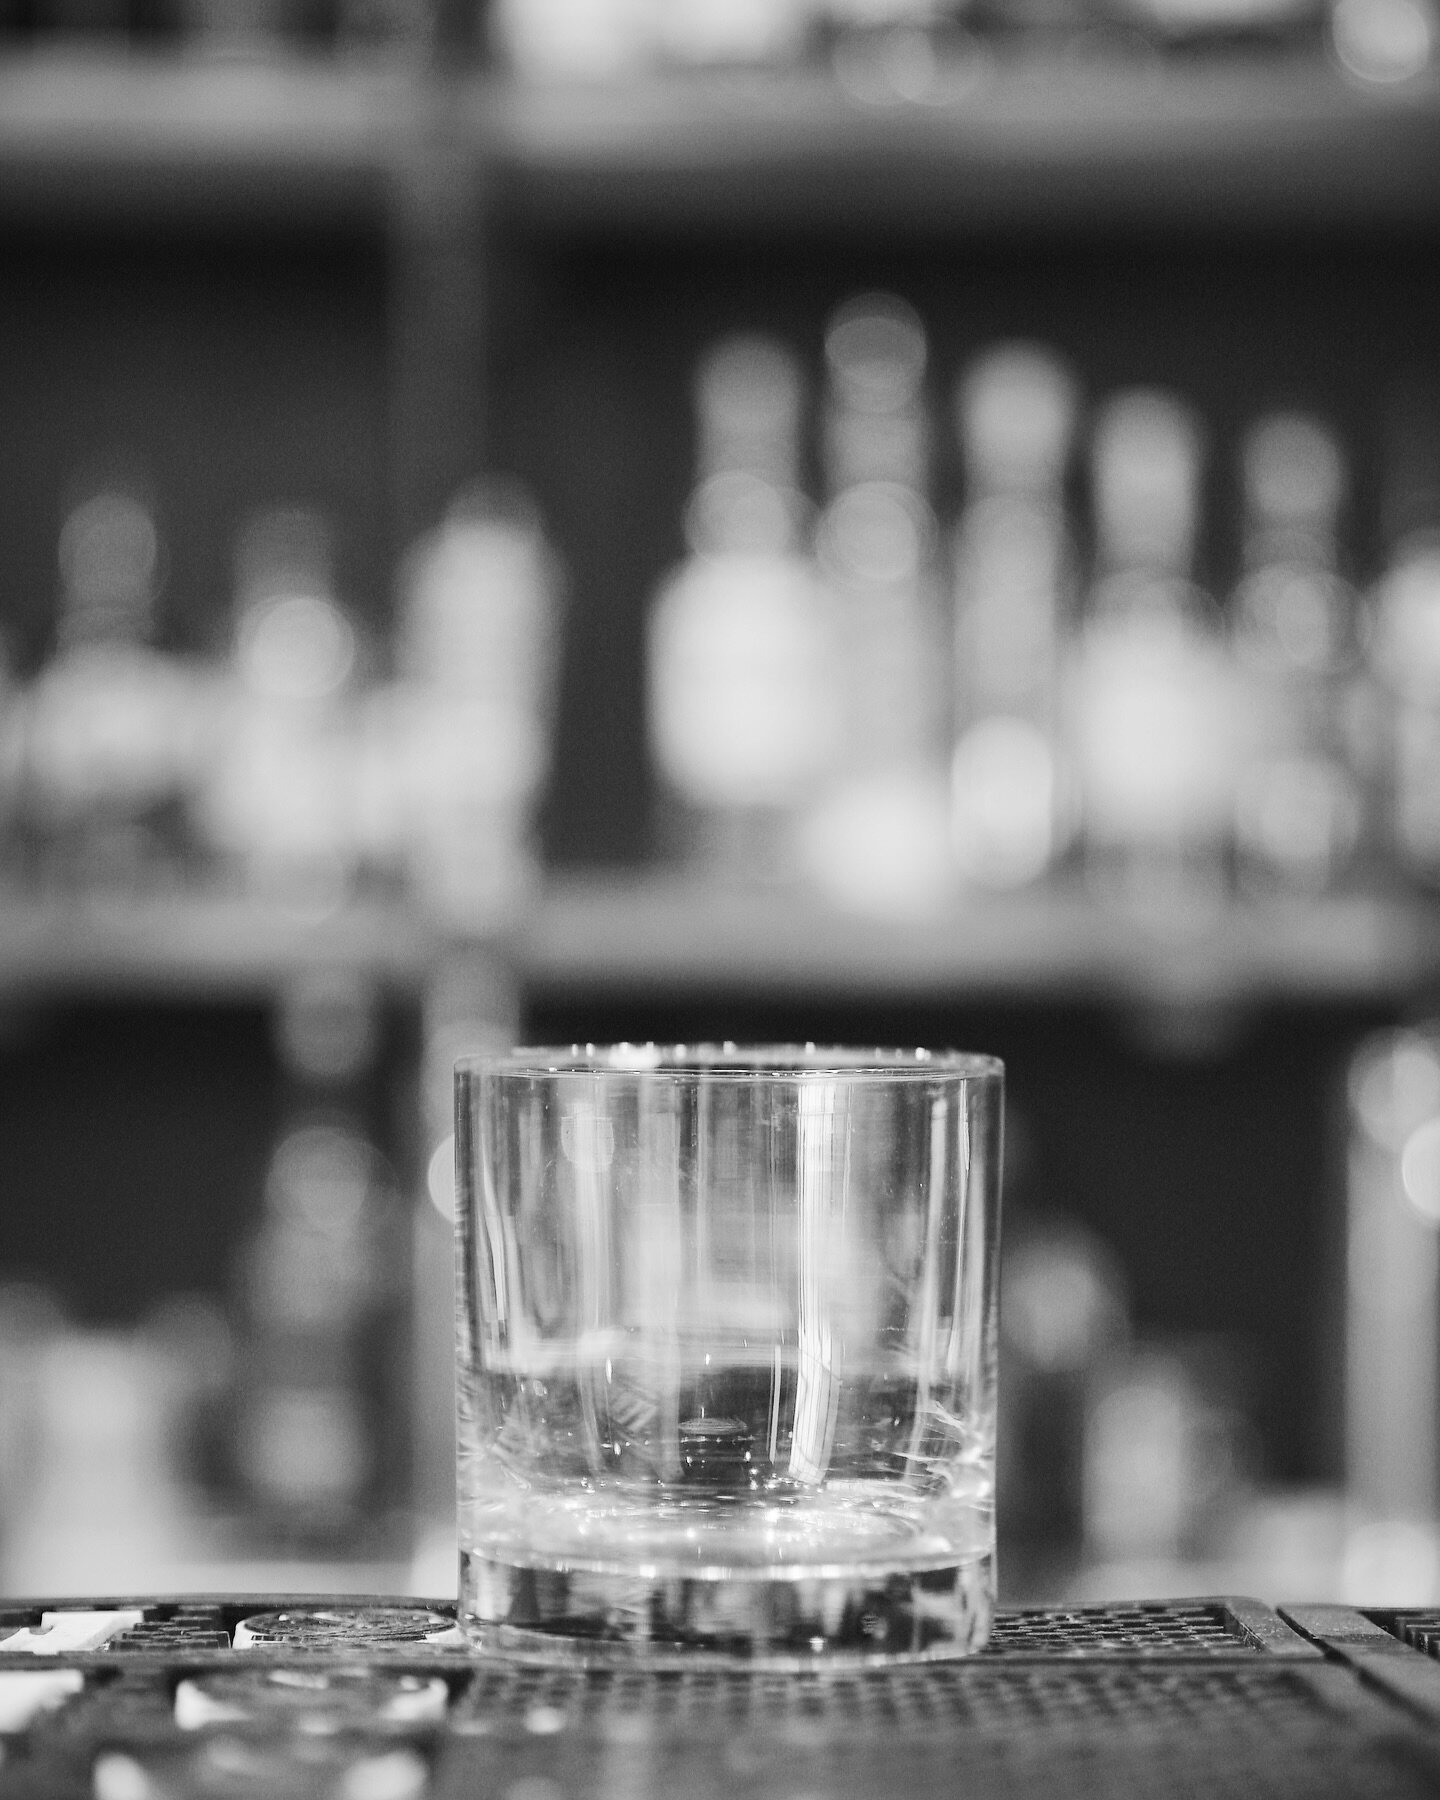 What&rsquo;s your everyday sipper? 🥃
-
-
-
#bourbon #whiskey #fullbar #theblockhouse #tnbar #nashvillebar #franklintn #thefactoryatfranklin #whiskeylife #bourbonlover #bourbonwhiskey #bourbonneat #whiskynerd